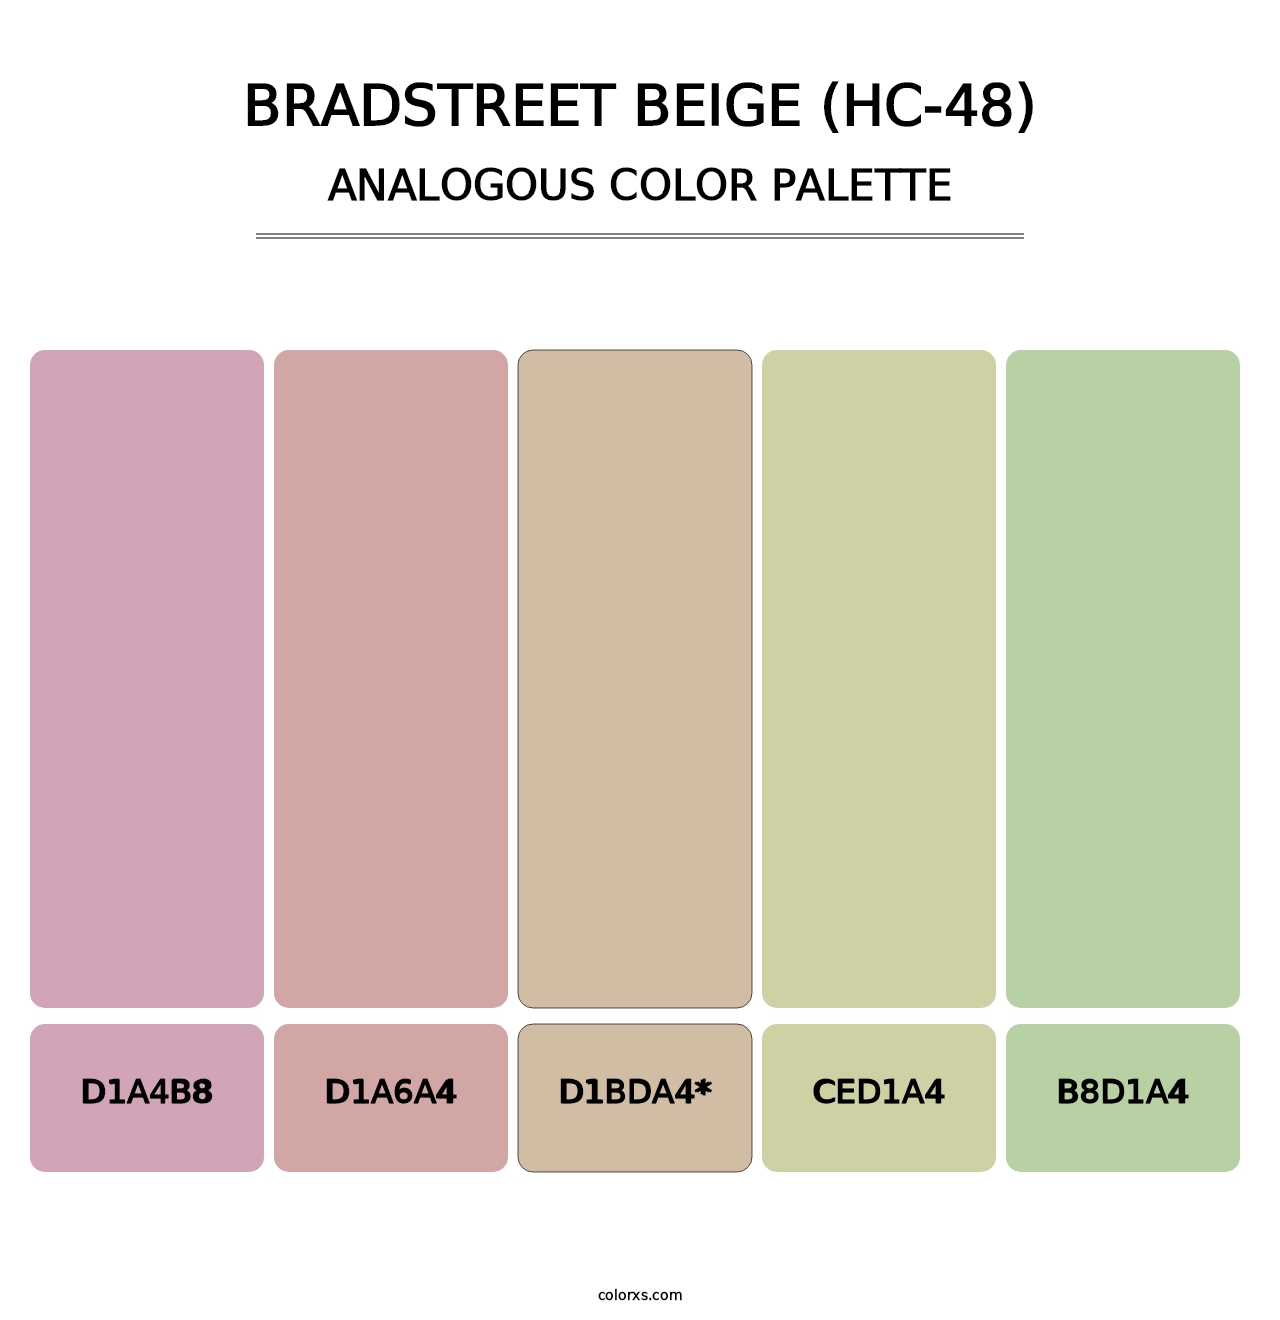 Bradstreet Beige (HC-48) - Analogous Color Palette